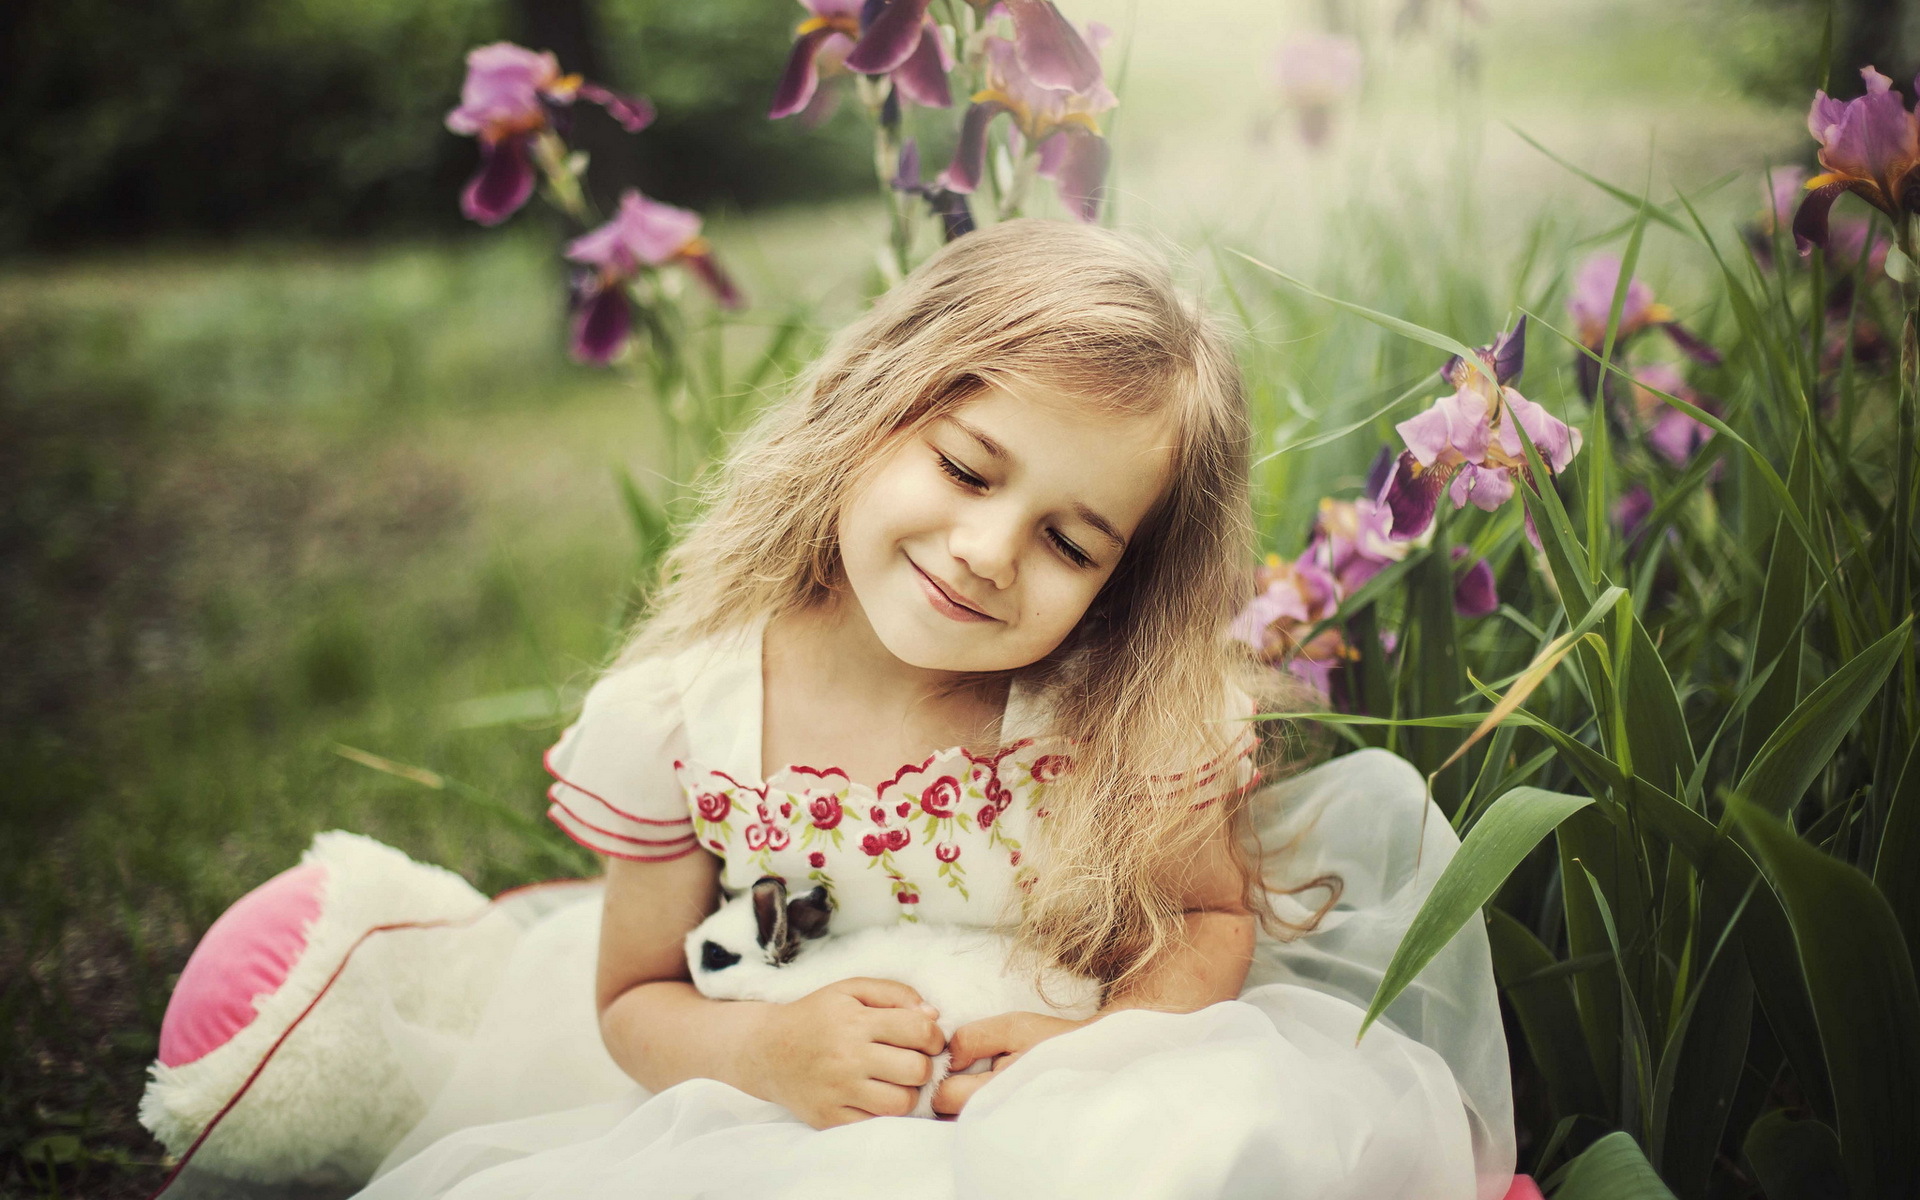 Image: Girl, dress, keep, rabbit, greens, nature, mood